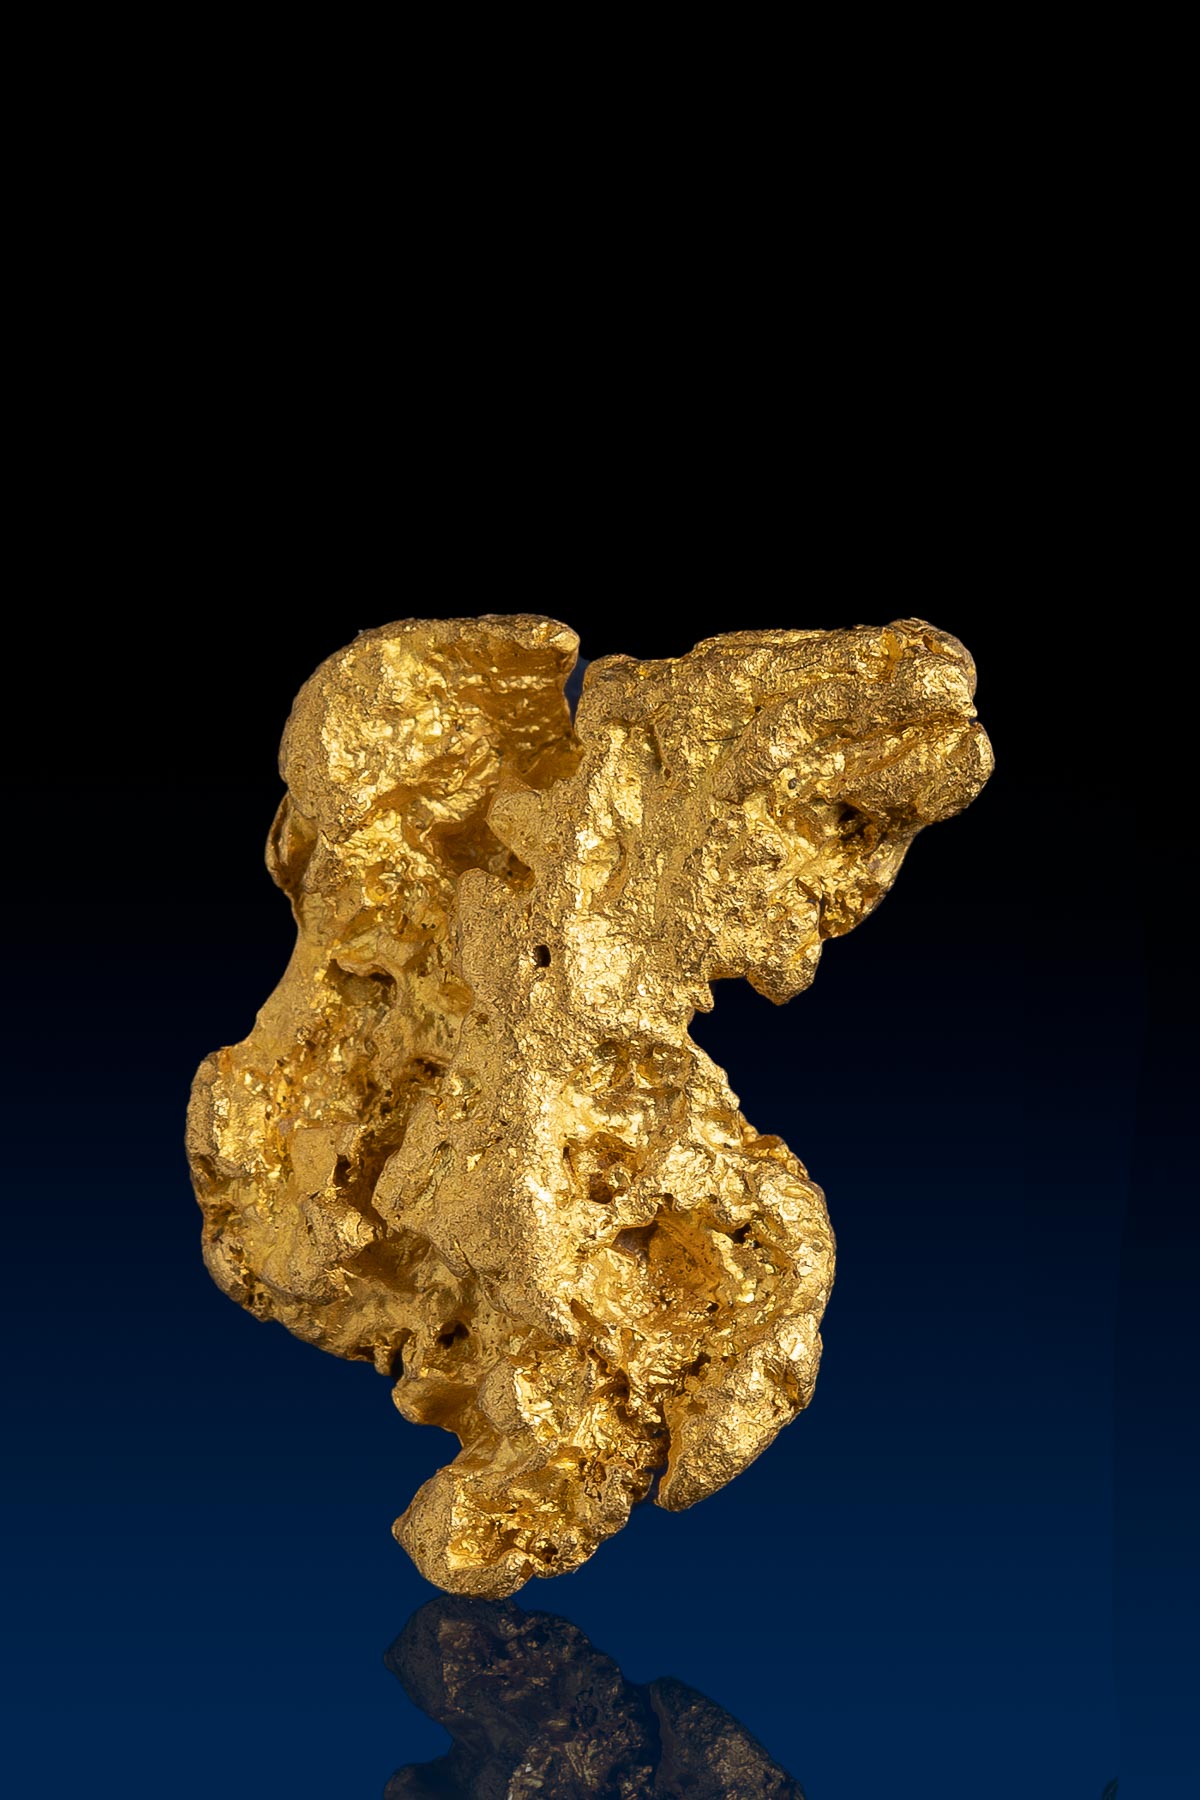 S Shaped Australian Natural Gold Nugget - 4.85 grams